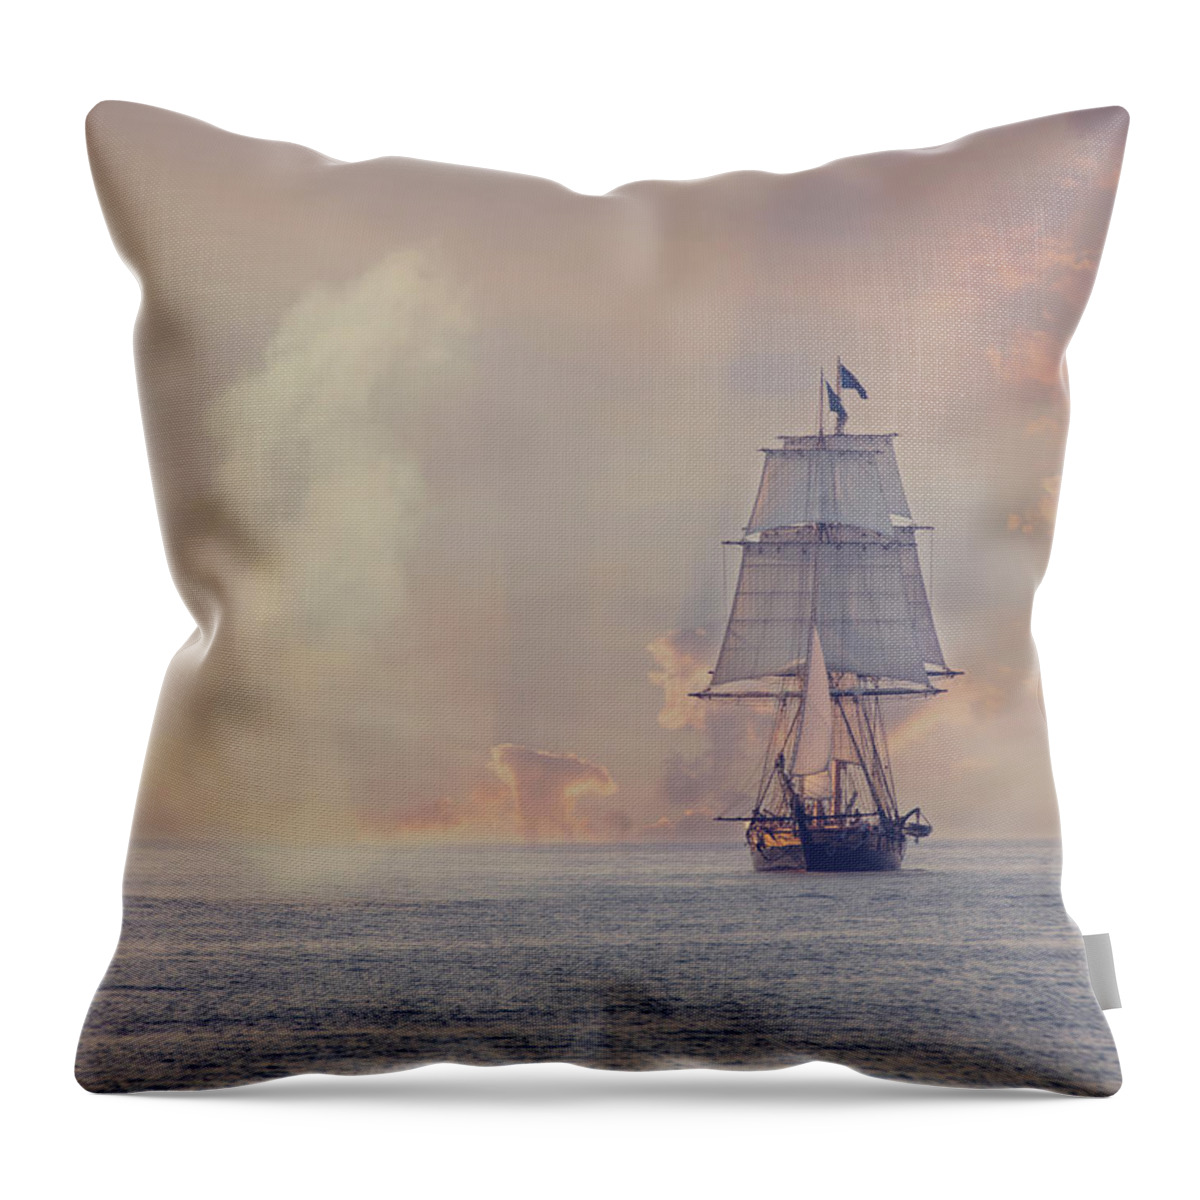 Ship Throw Pillow featuring the photograph Evening Sail by Deborah Penland